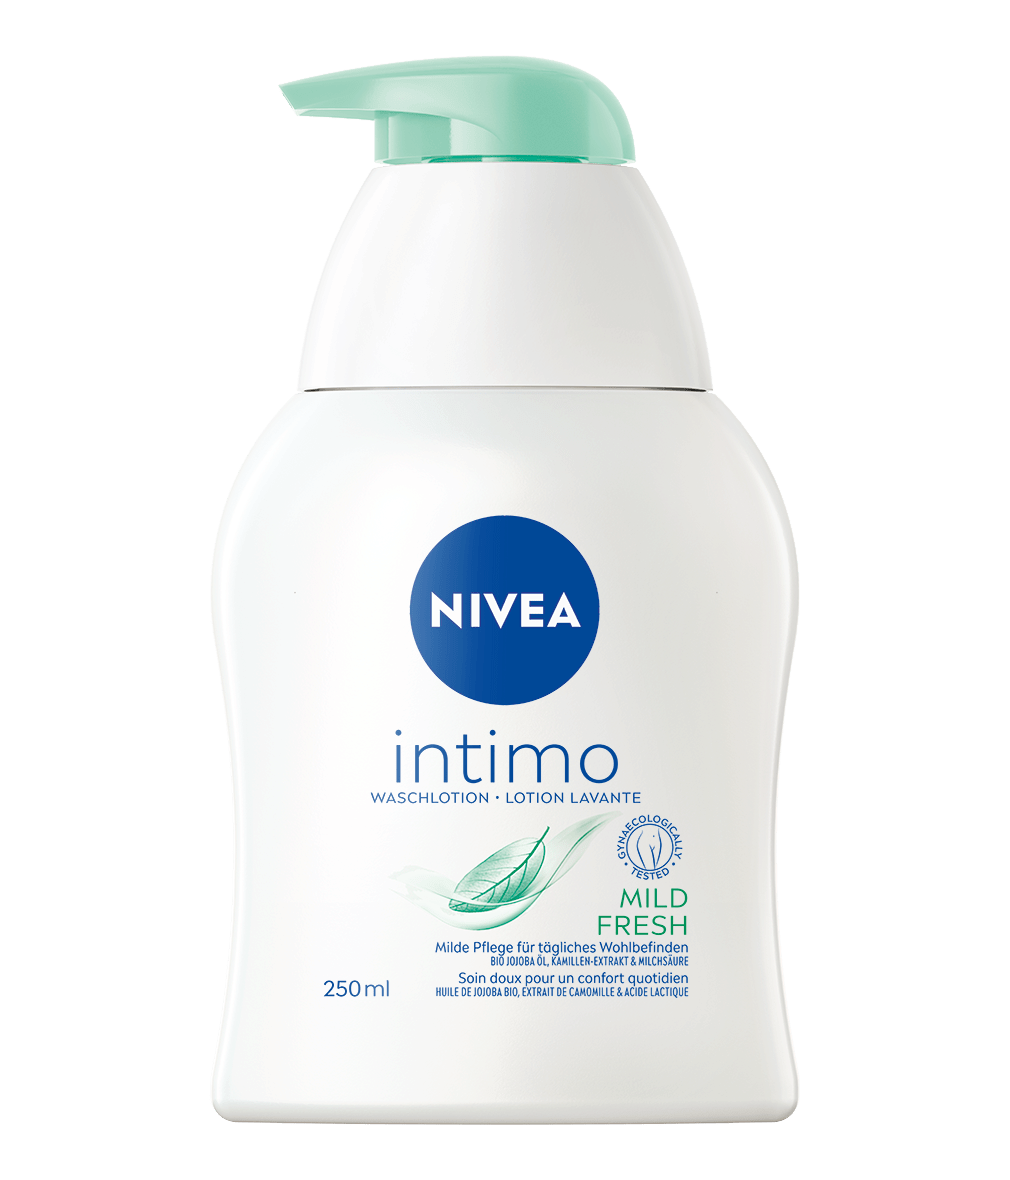 NIVEA Intimo Mild Fresh Waschlotion_250ml